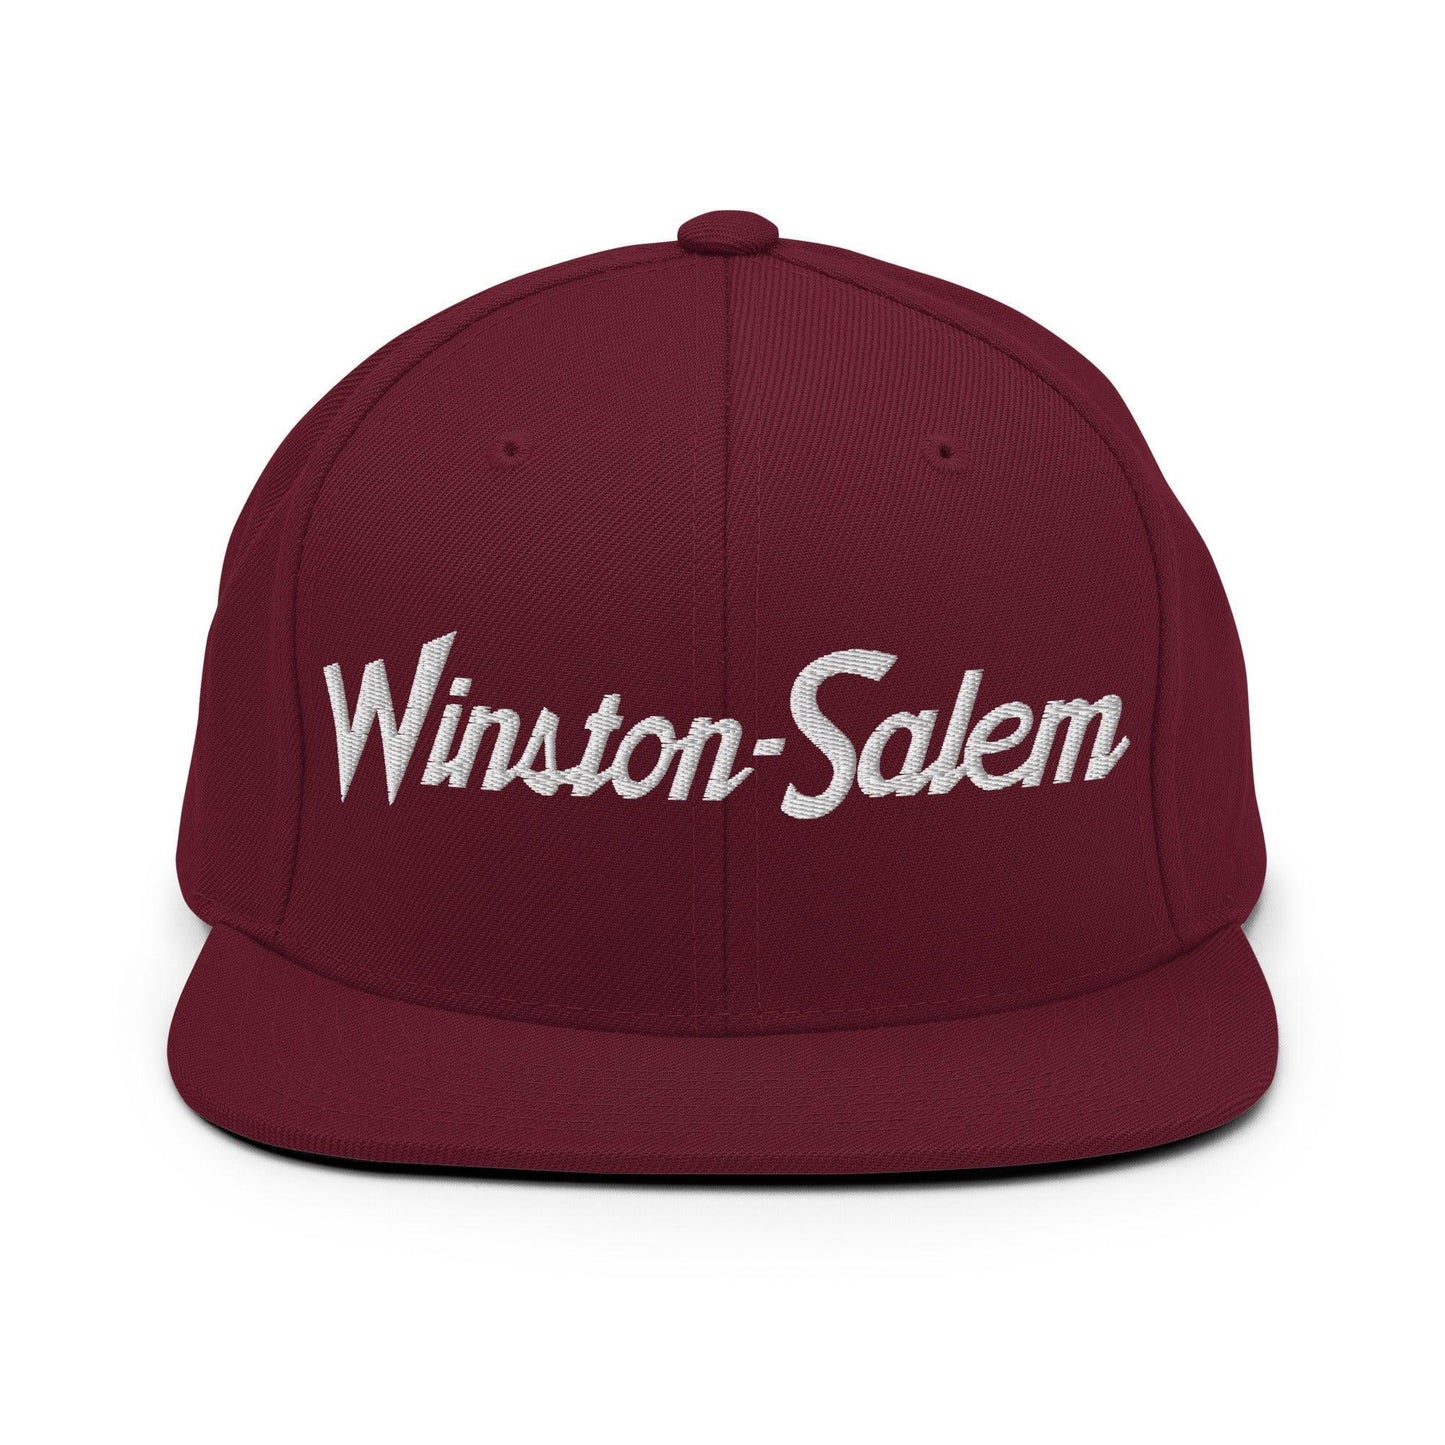 Winston-Salem Script Snapback Hat Maroon